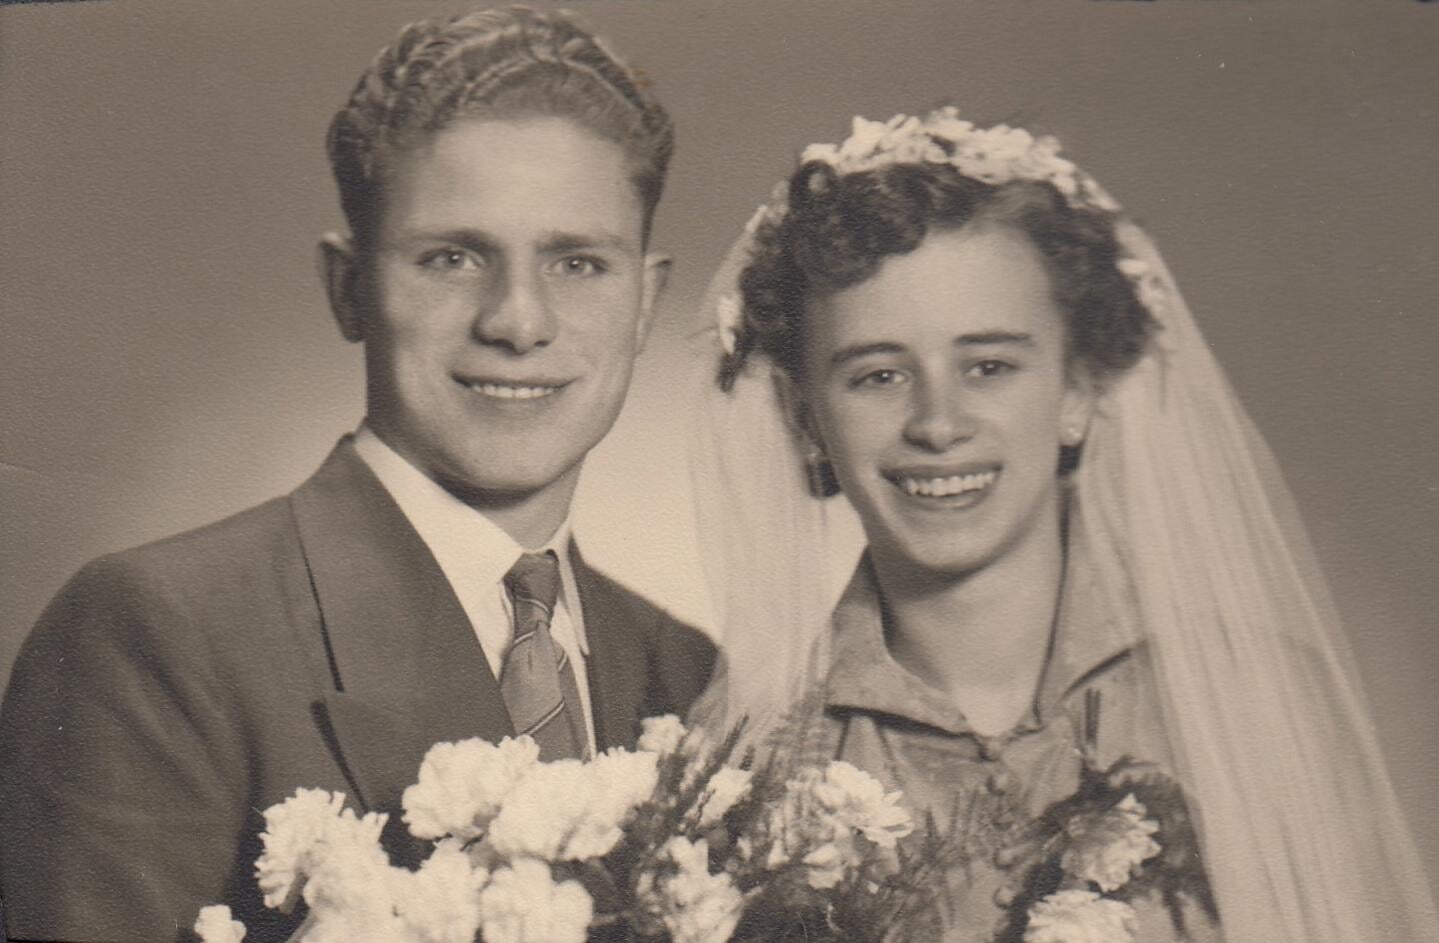  Het bruidspaar op 13 januari 1954. 